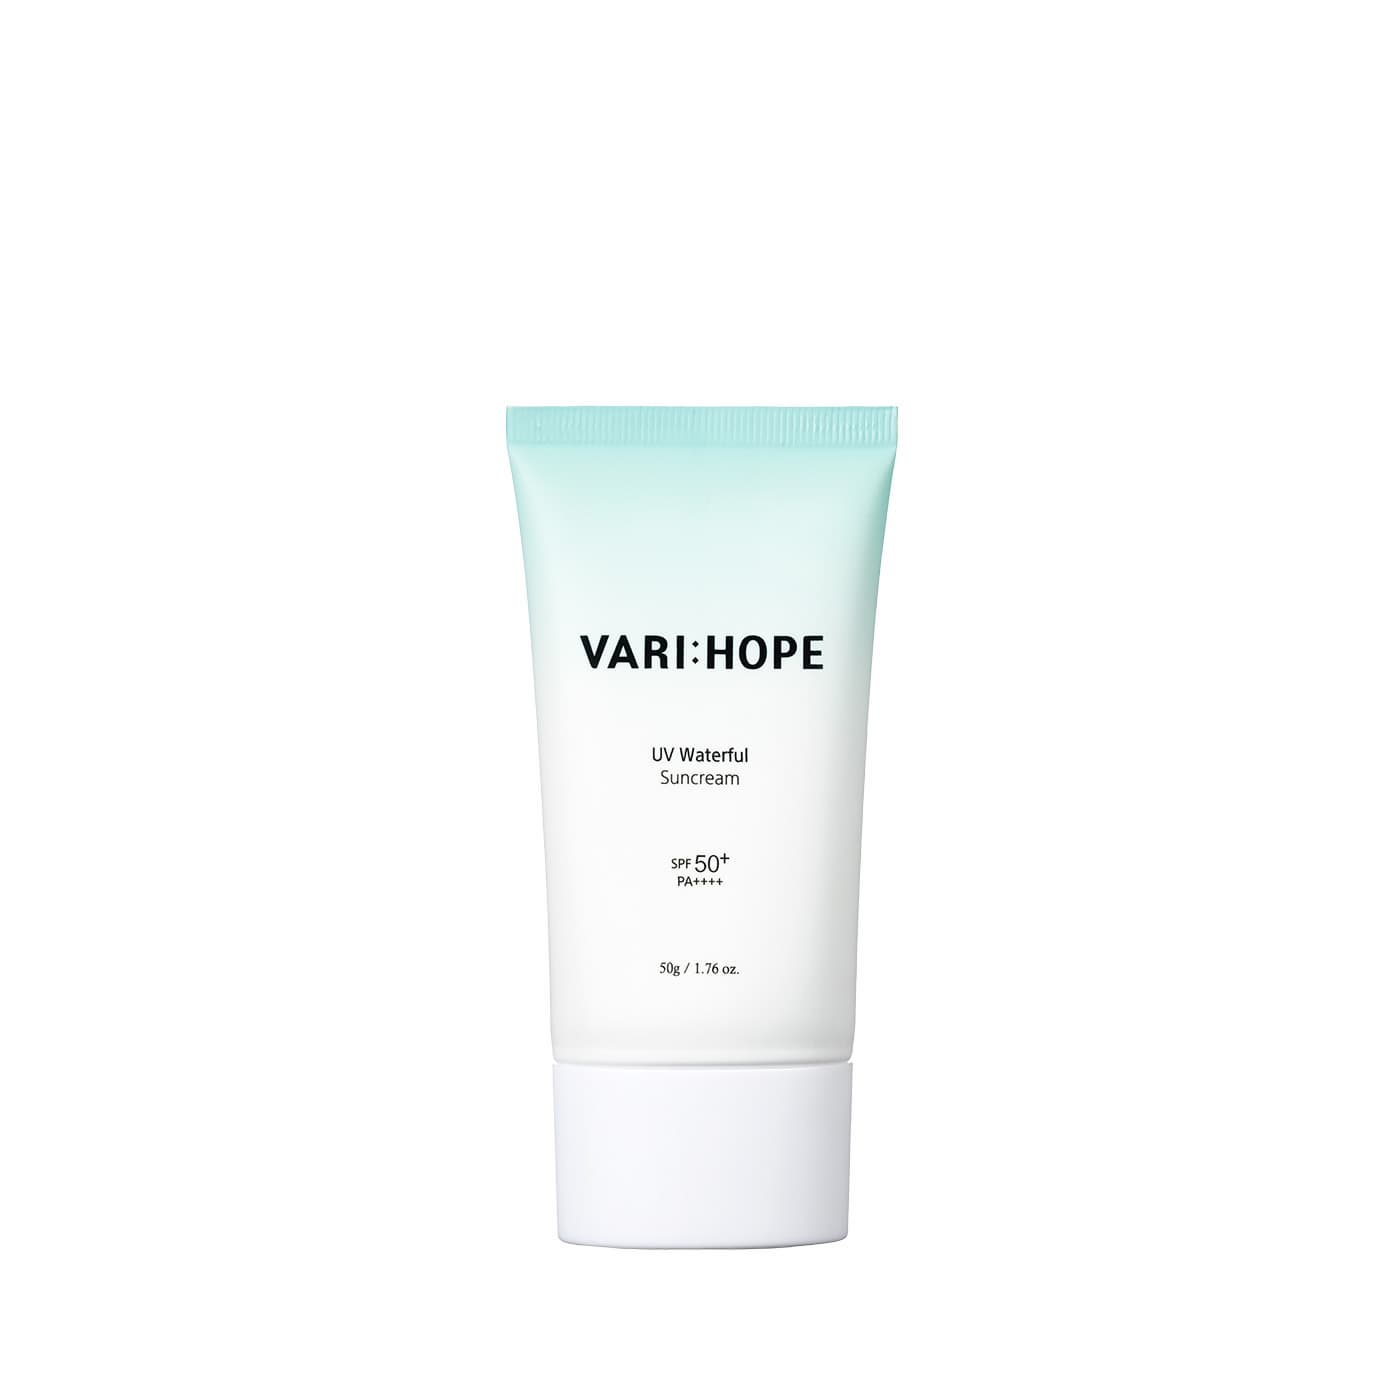 VARIHOPE UV waterful suncream